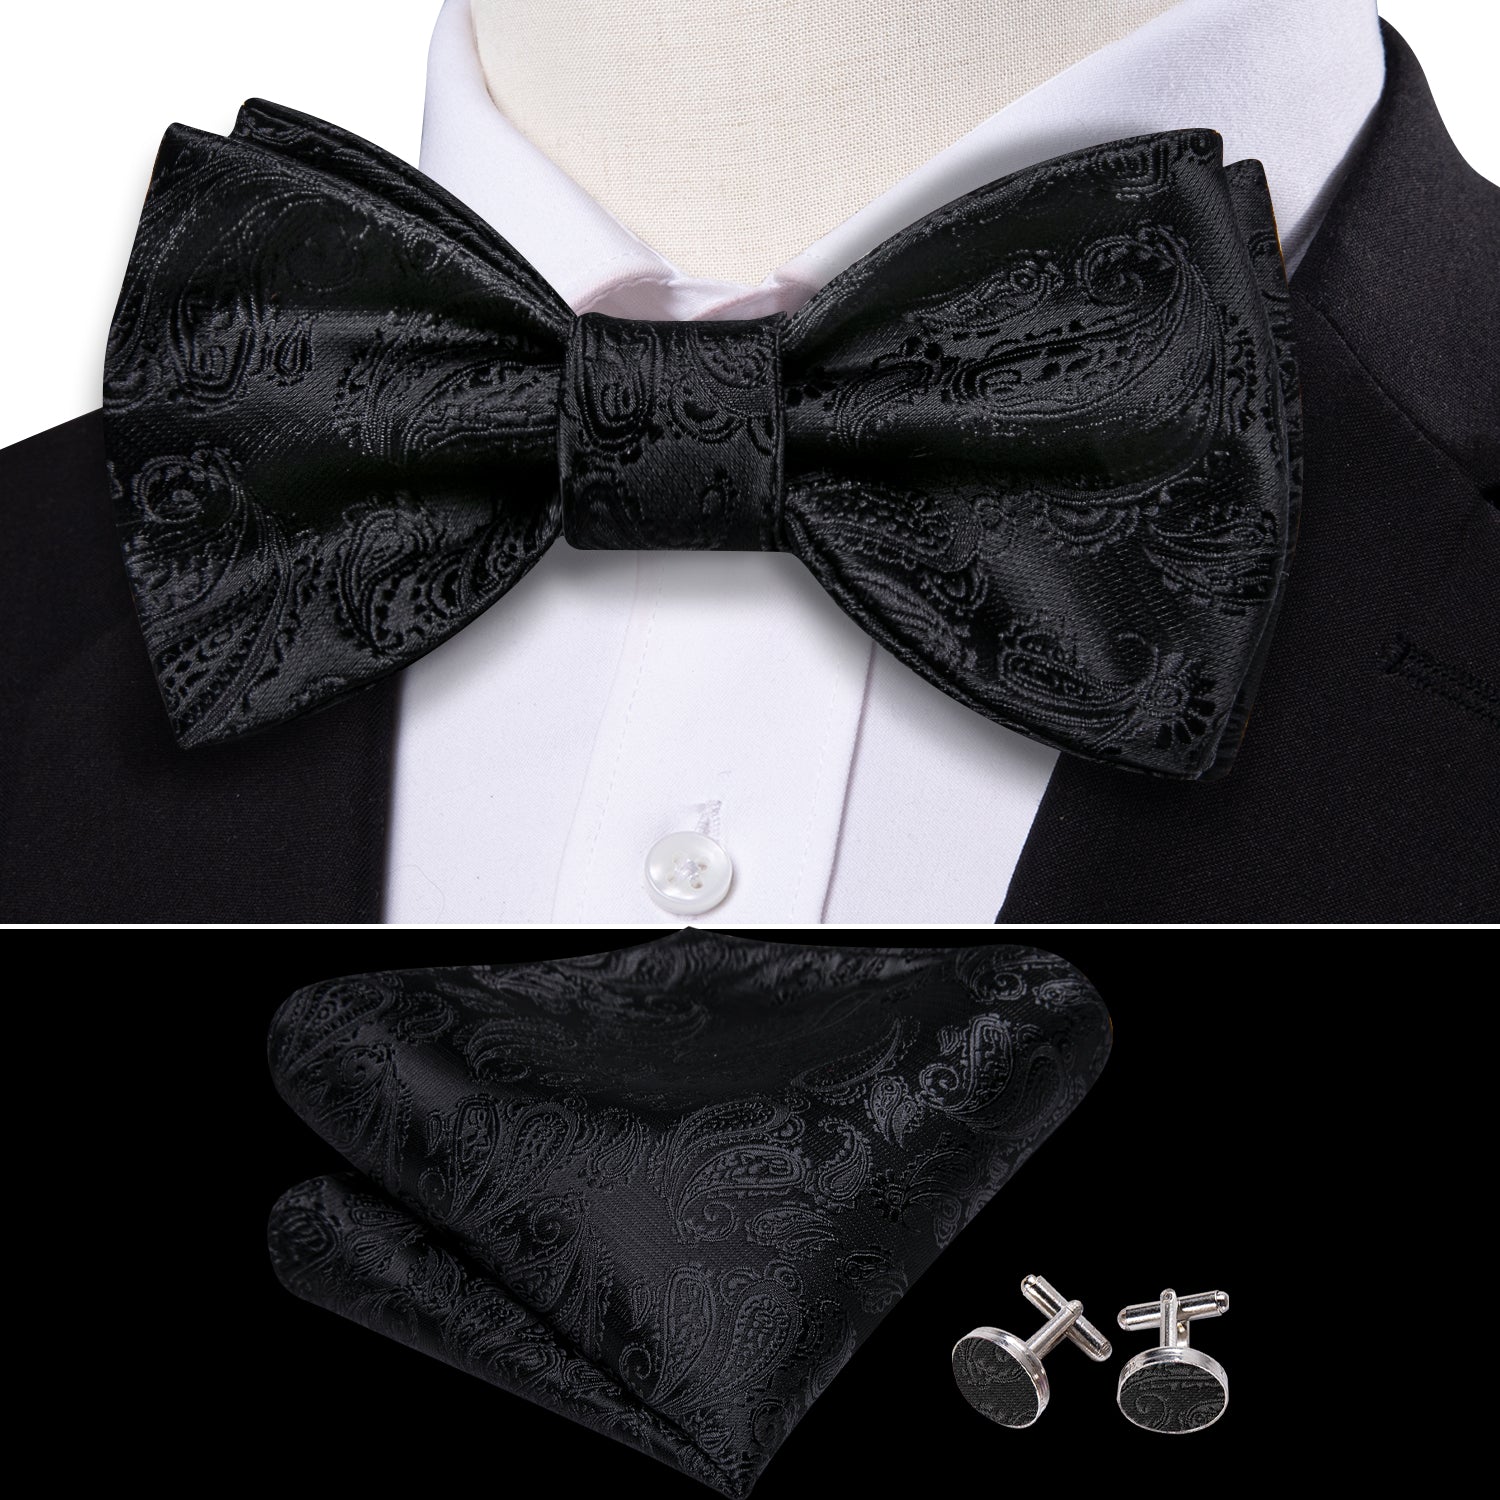 Luxury Black Paisley Bow Tie Hanky Cufflinks Set